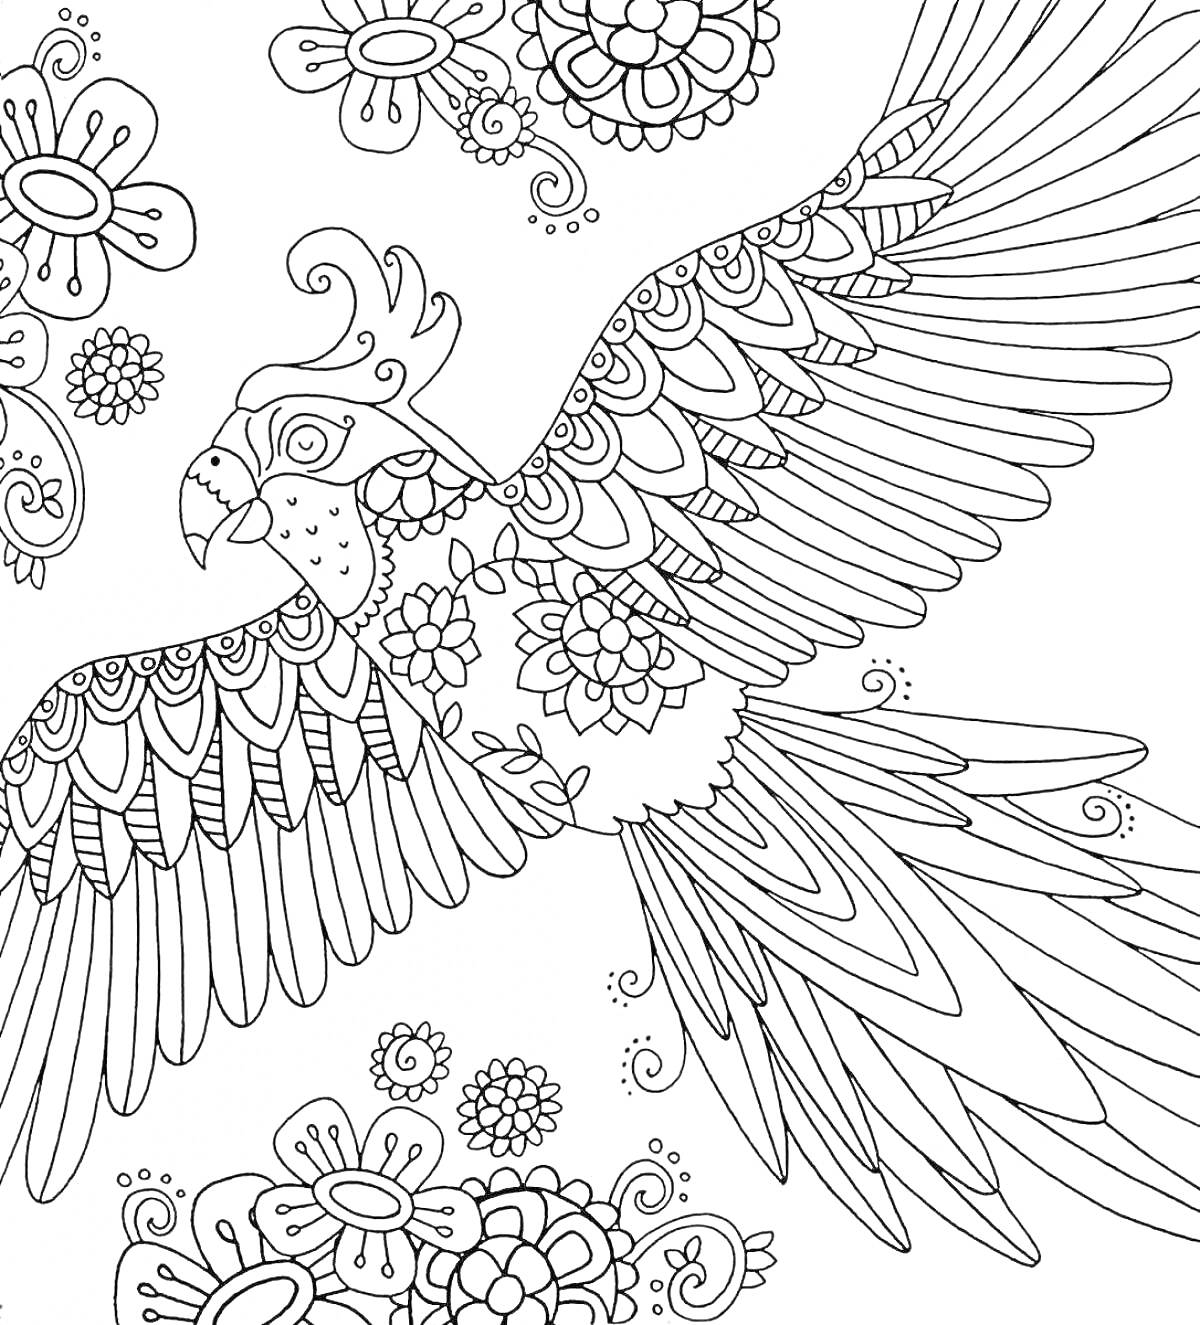 Раскраска Жар-птица с узорами, цветы, декоративные элементы